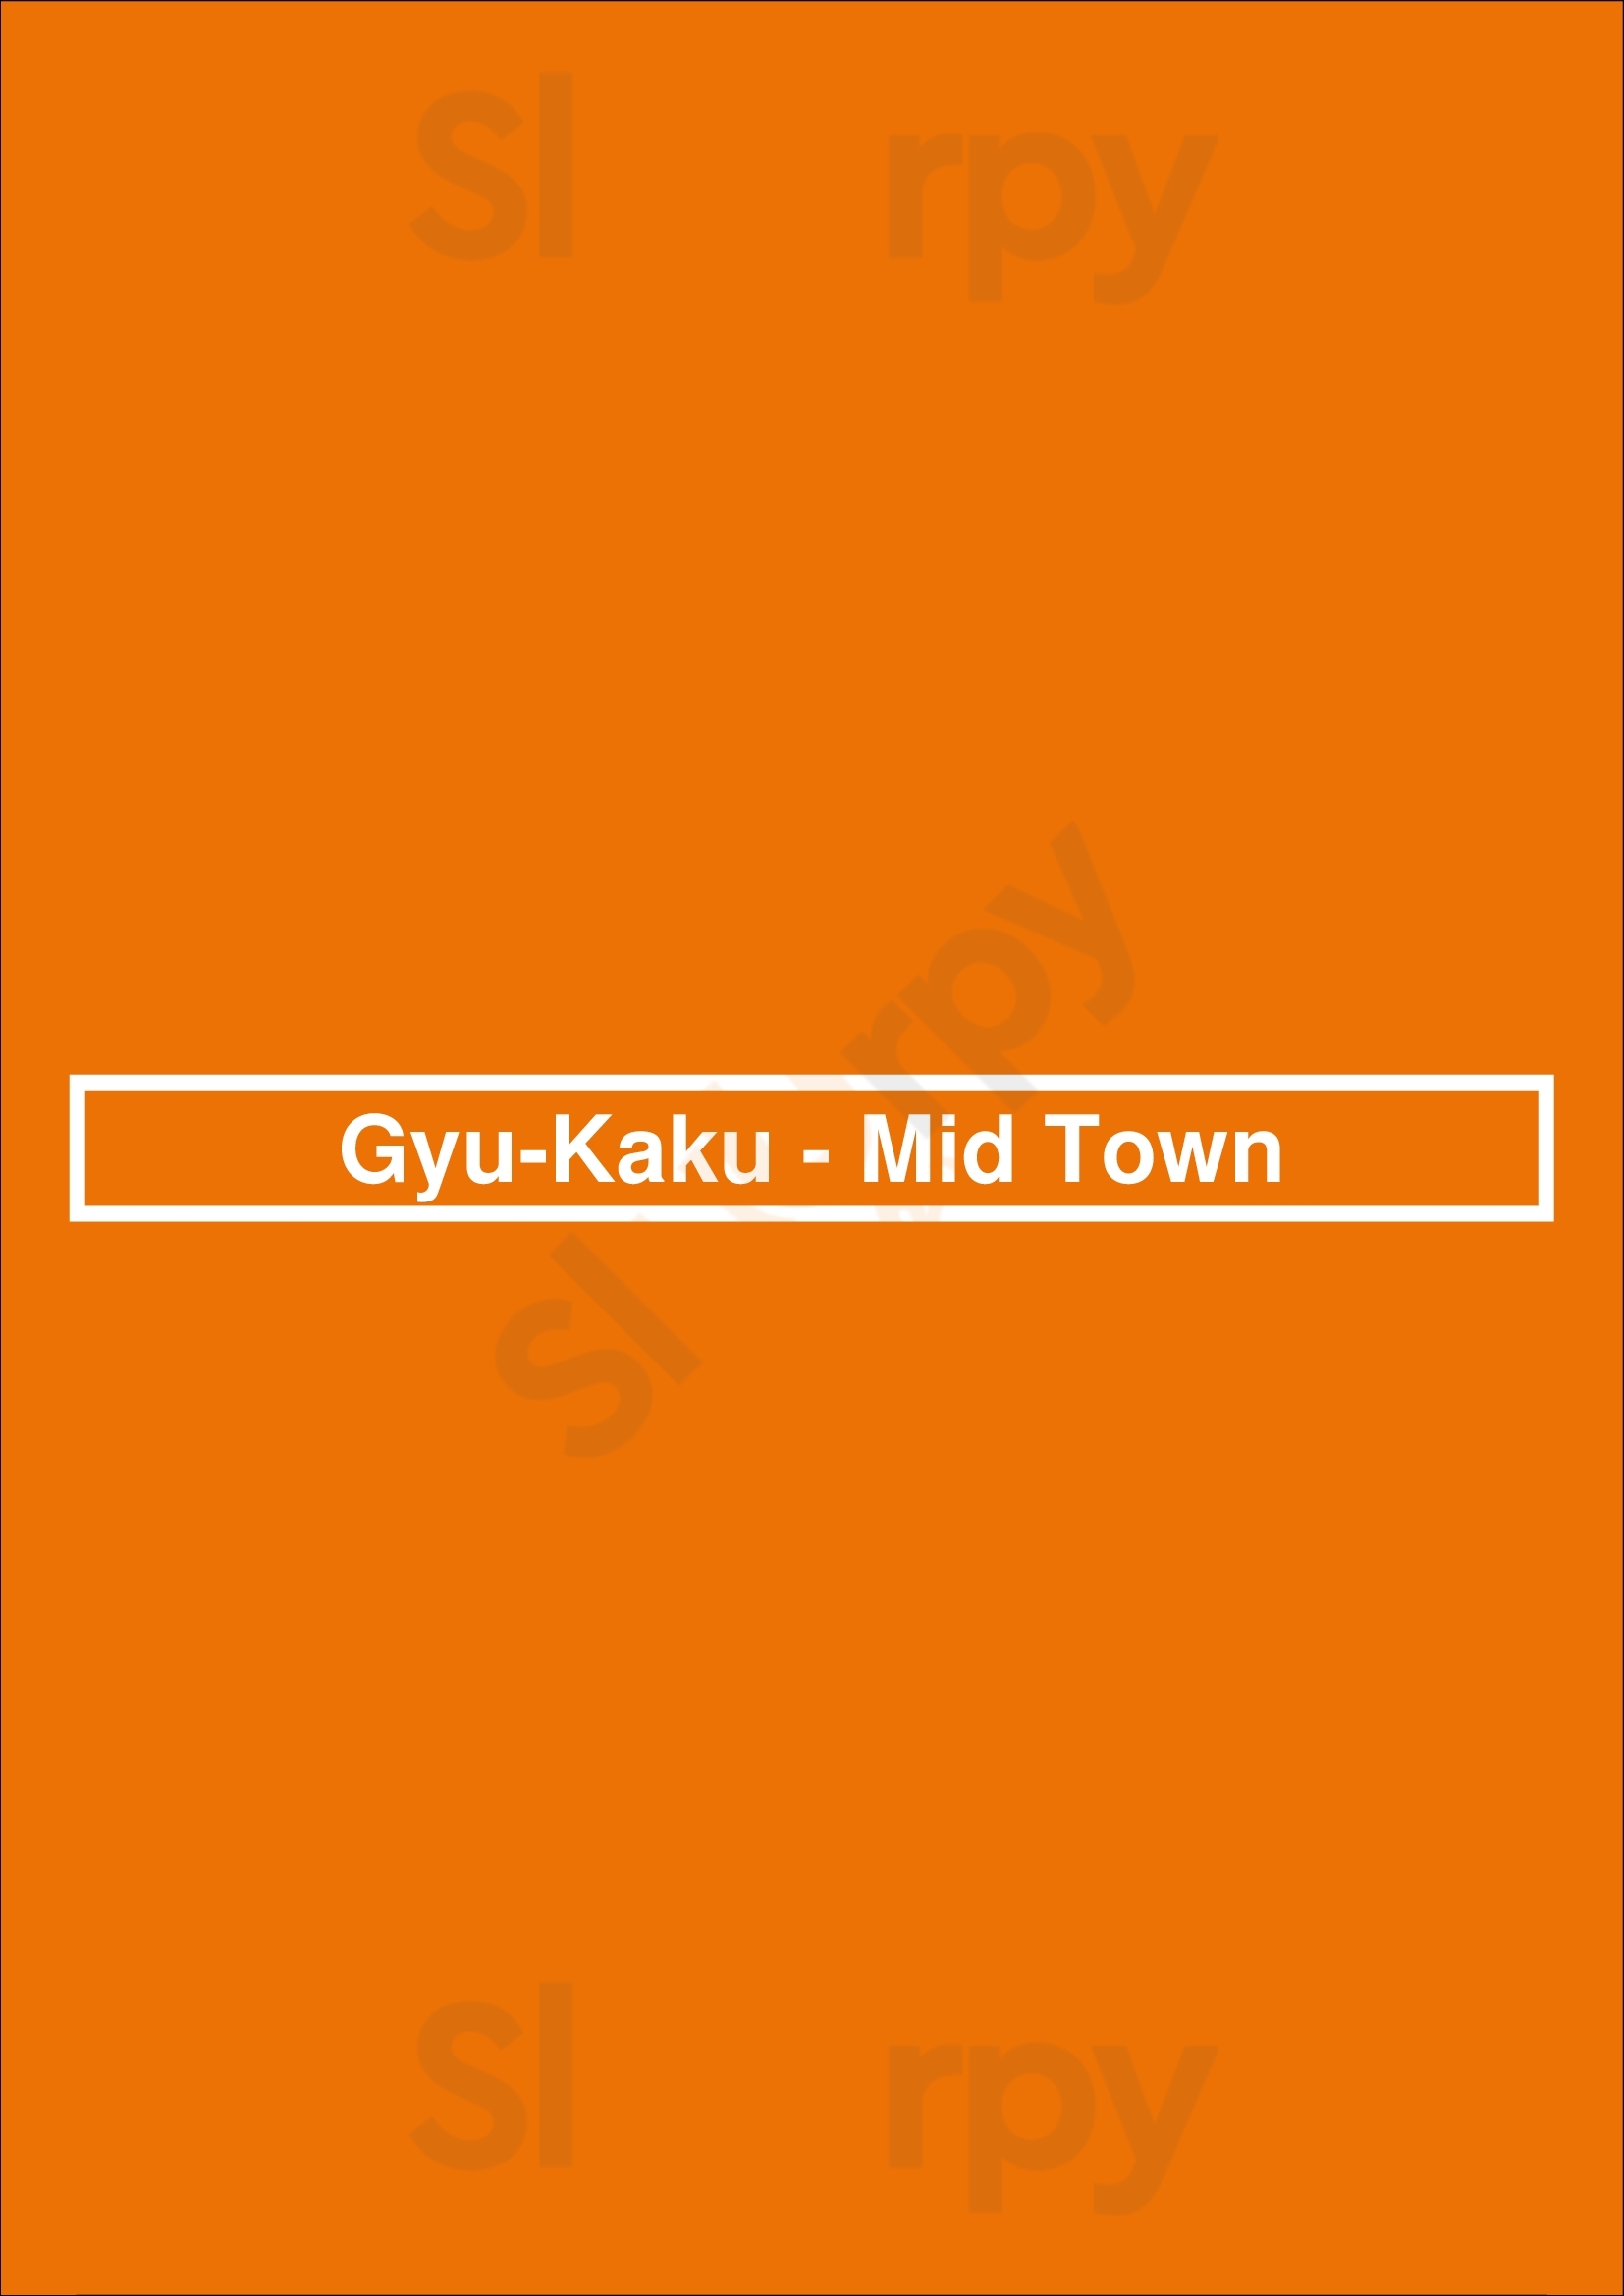 Gyu-kaku Japanese Bbq New York City Menu - 1